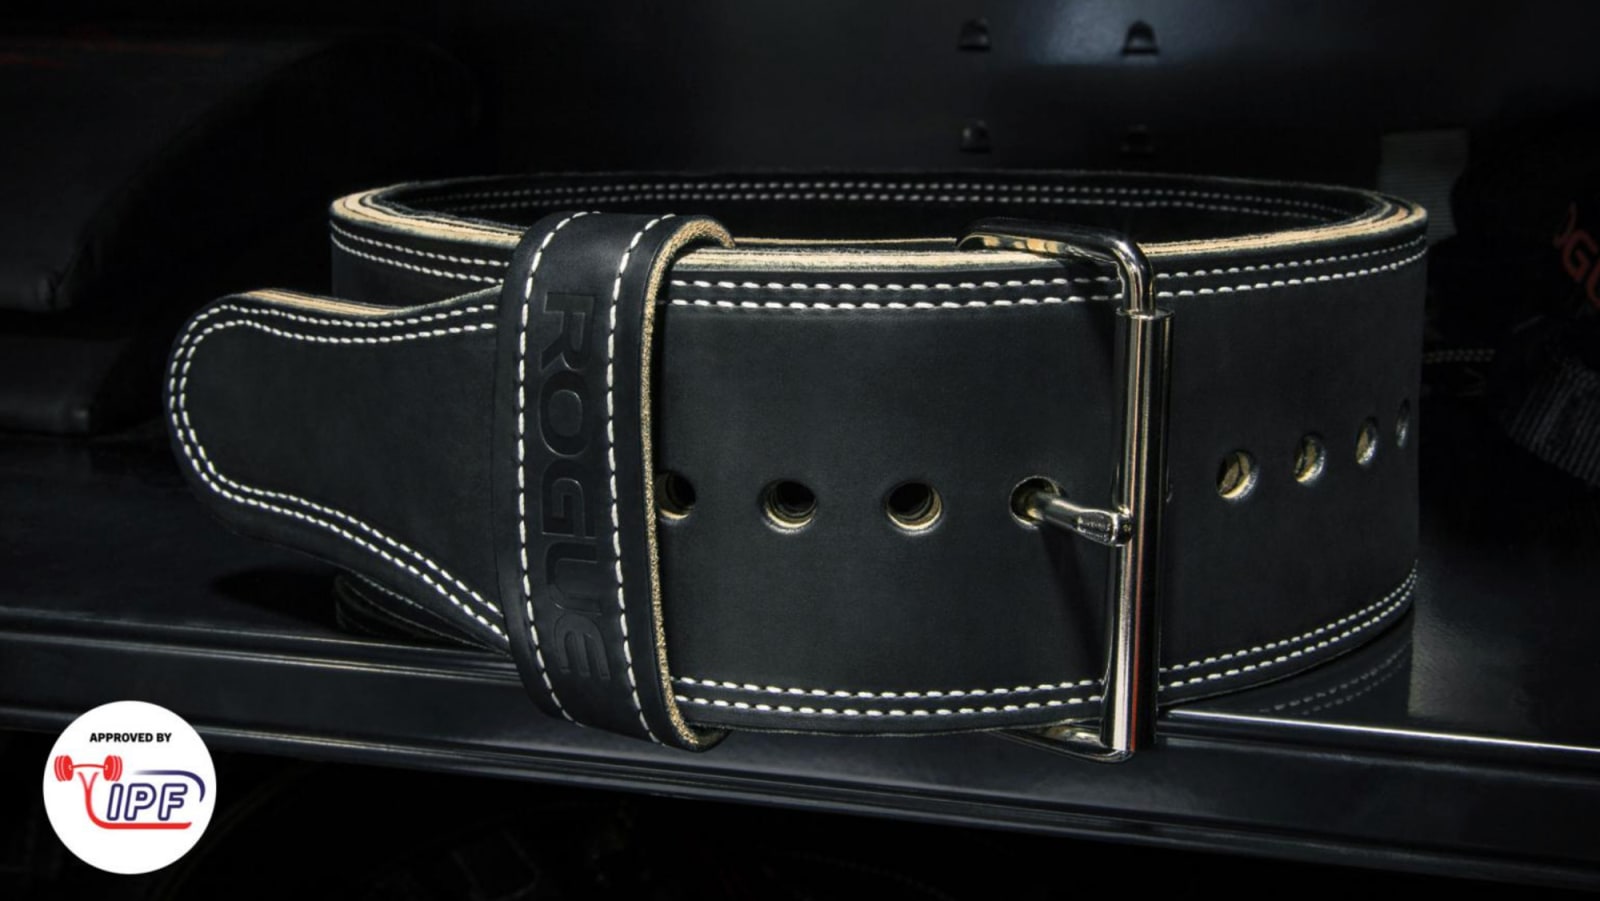 Rogue Leather Belt - 40